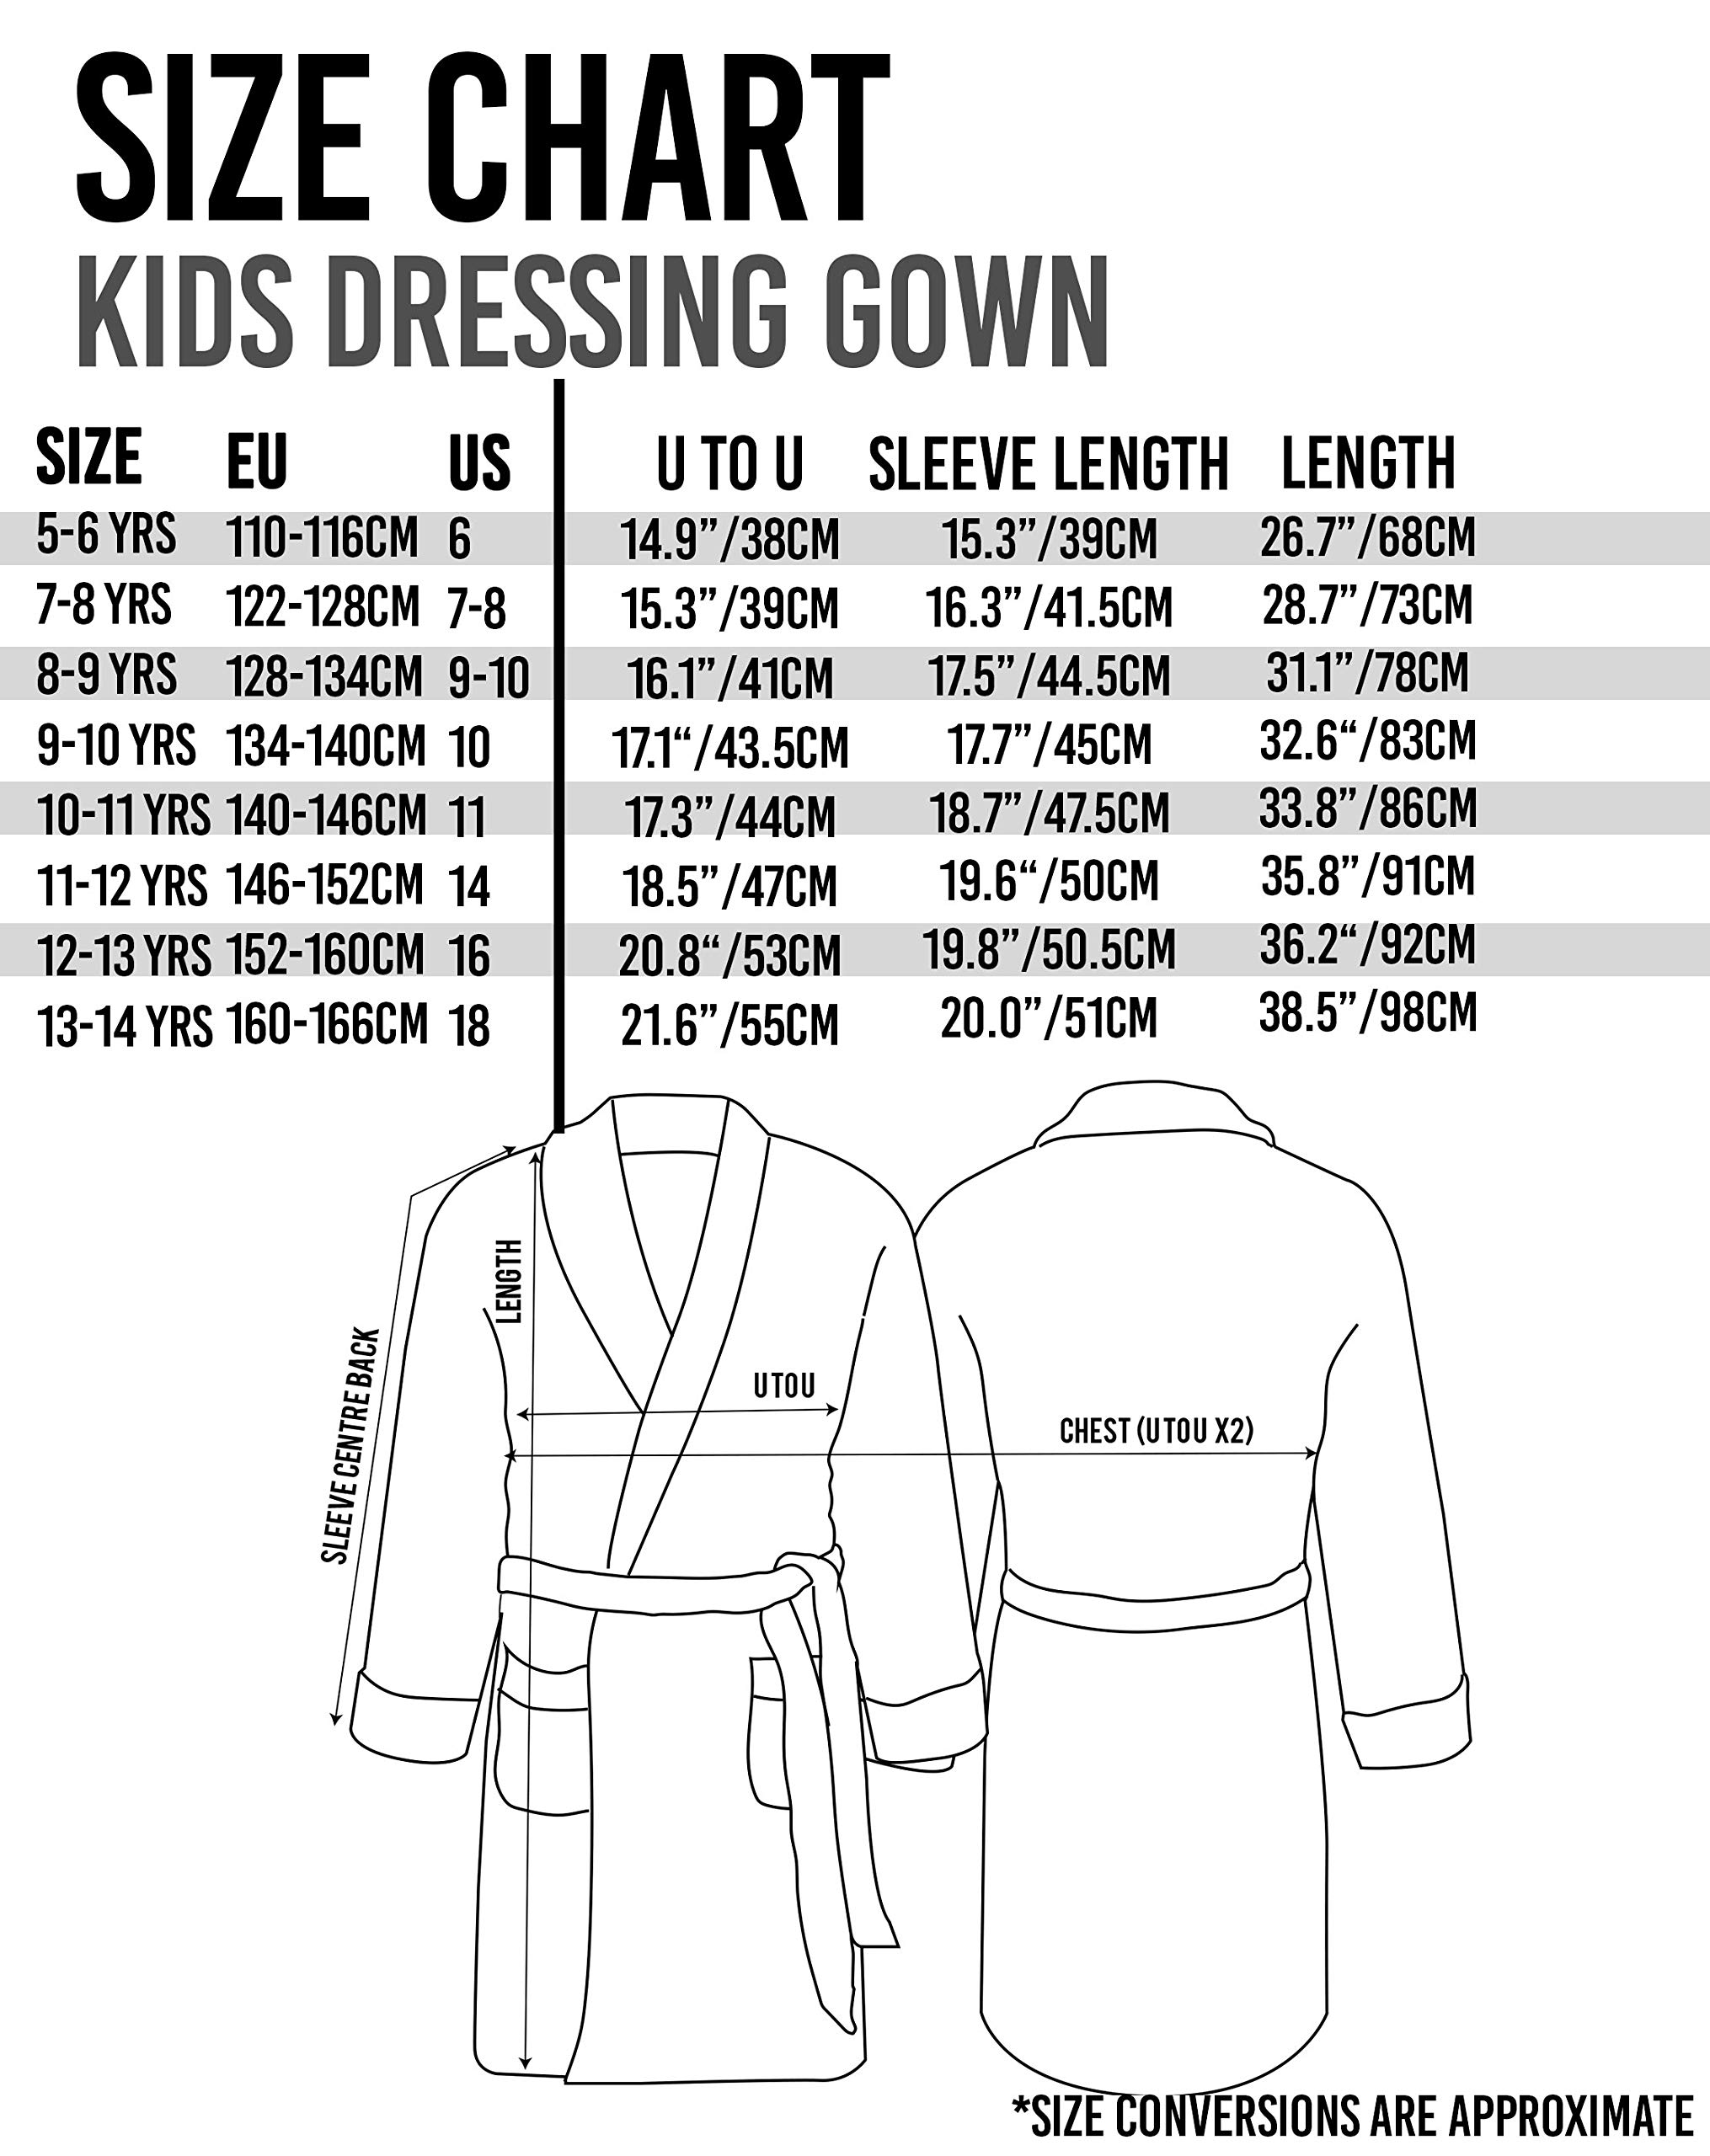 Sonic the Hedgehog Dressing Gown Kids Boys Character Bath-robe